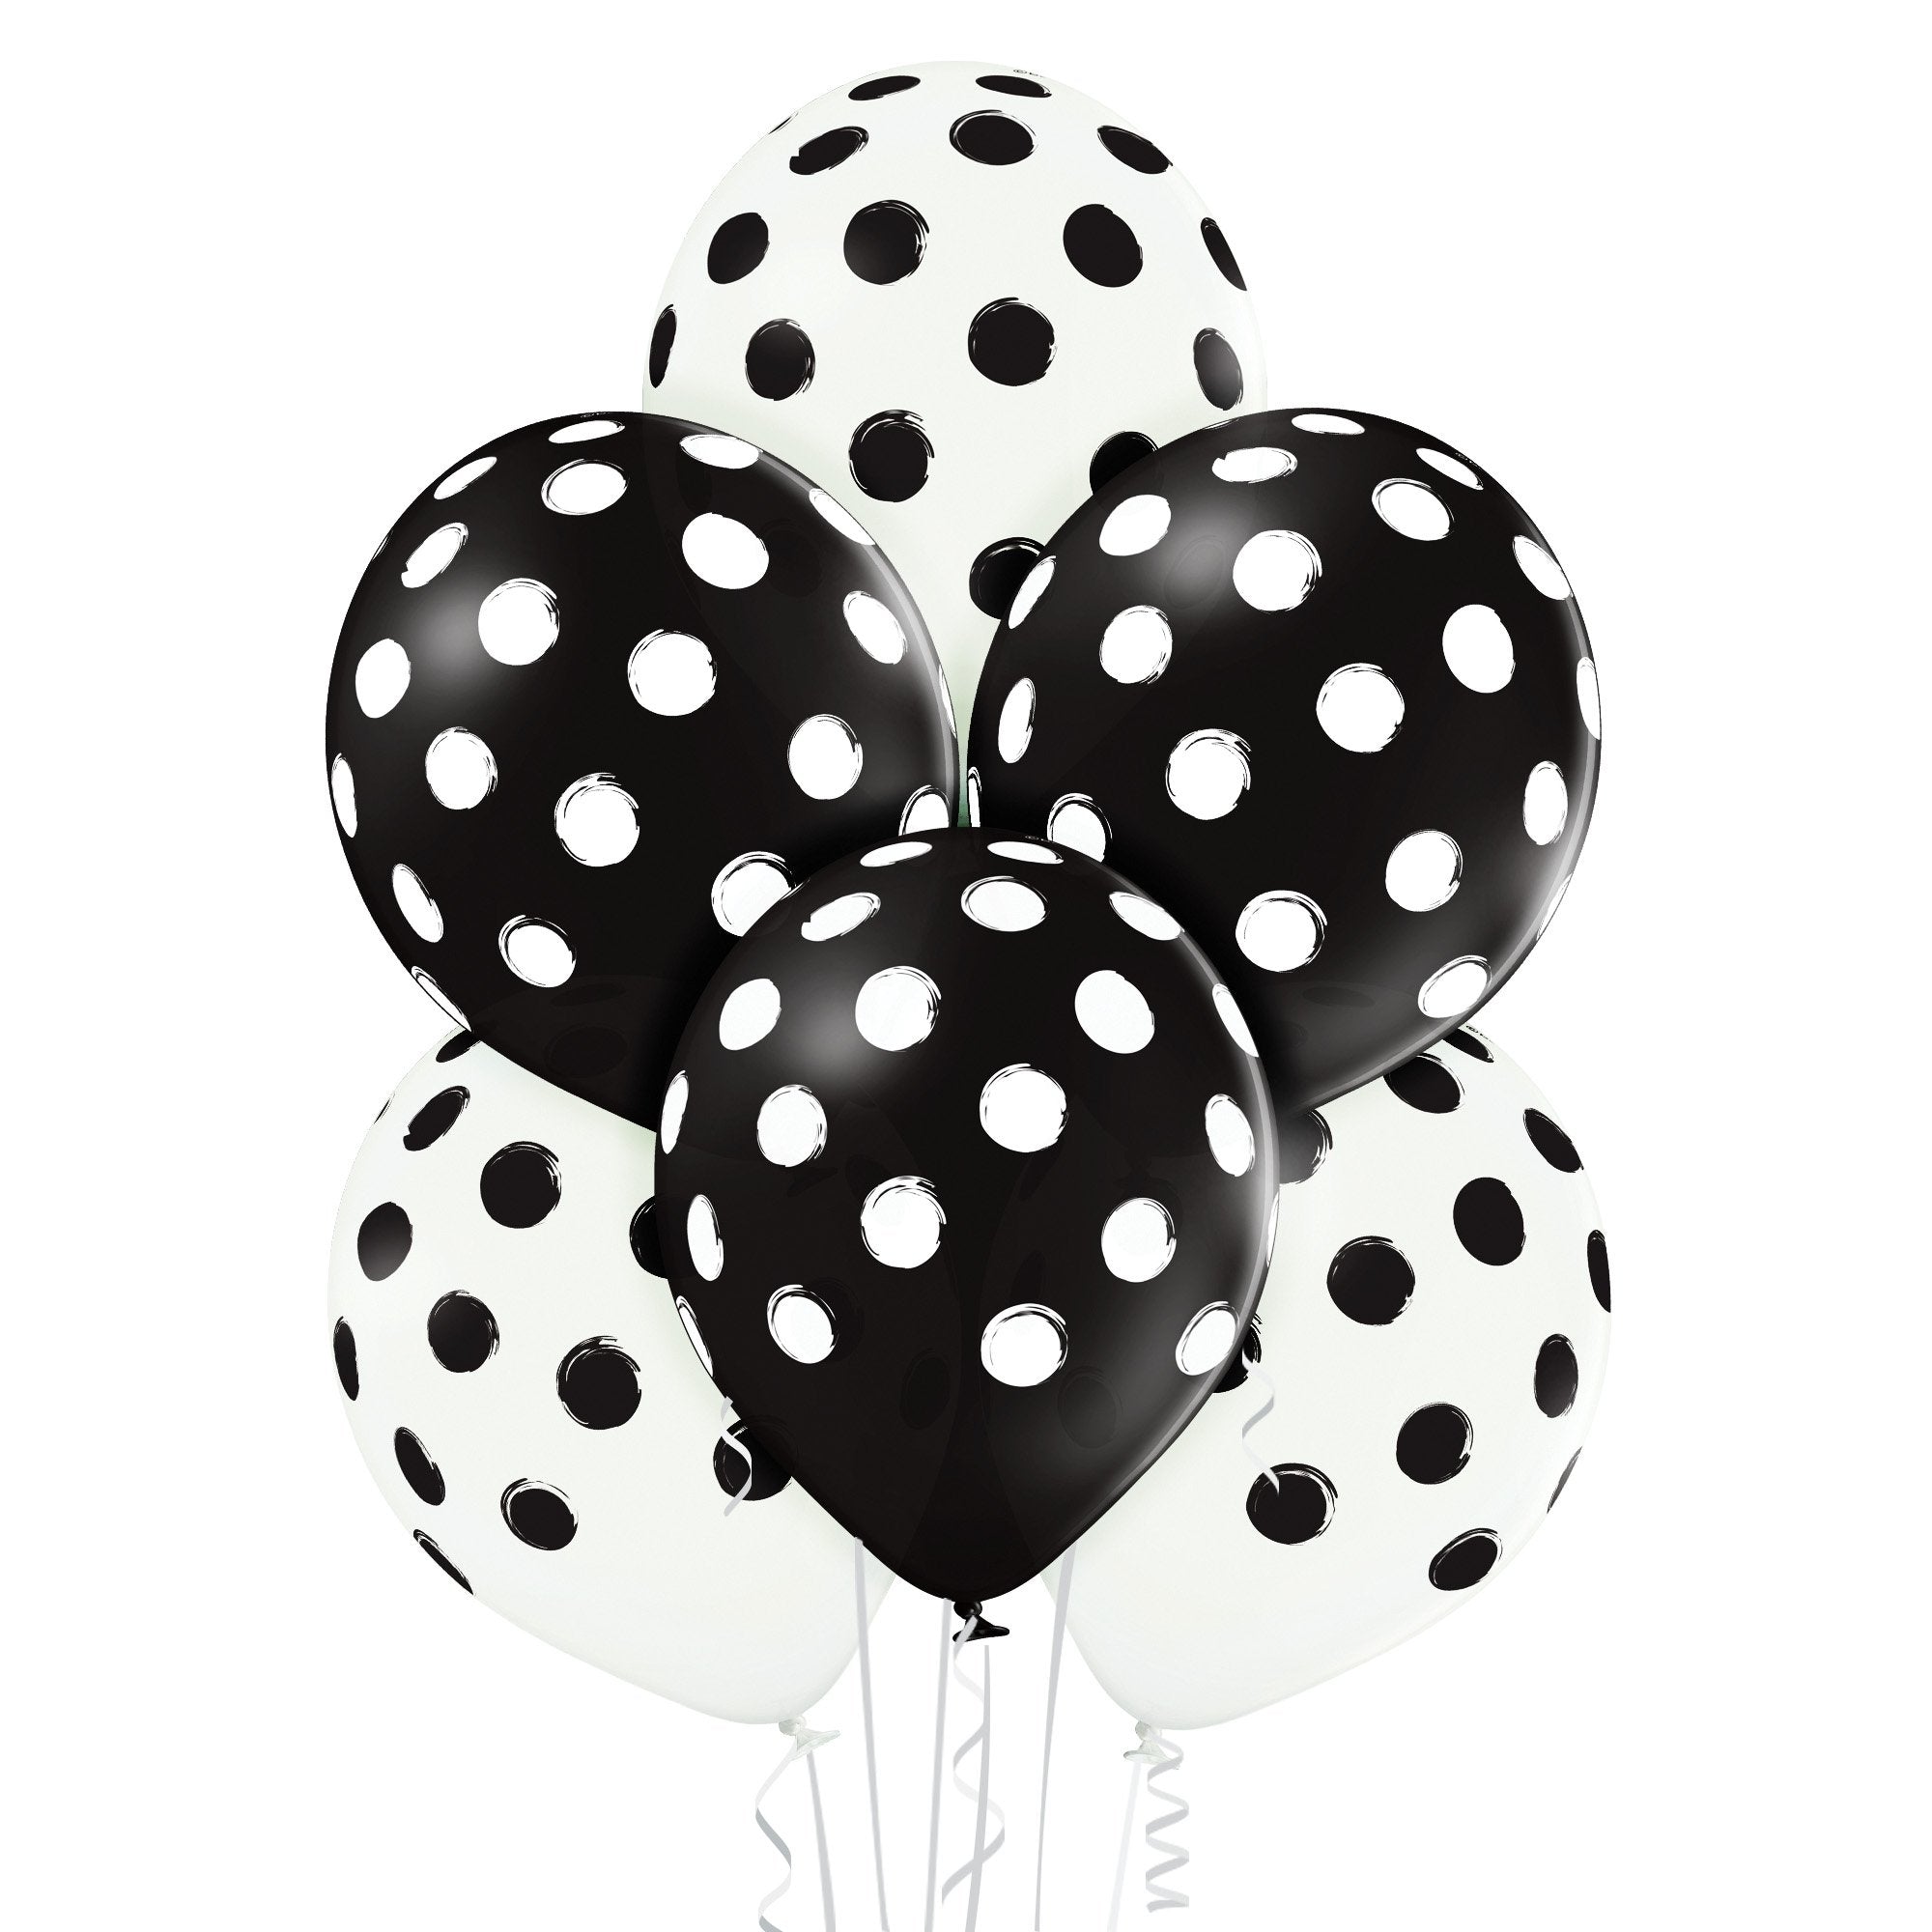 Black and white balloon bouquet